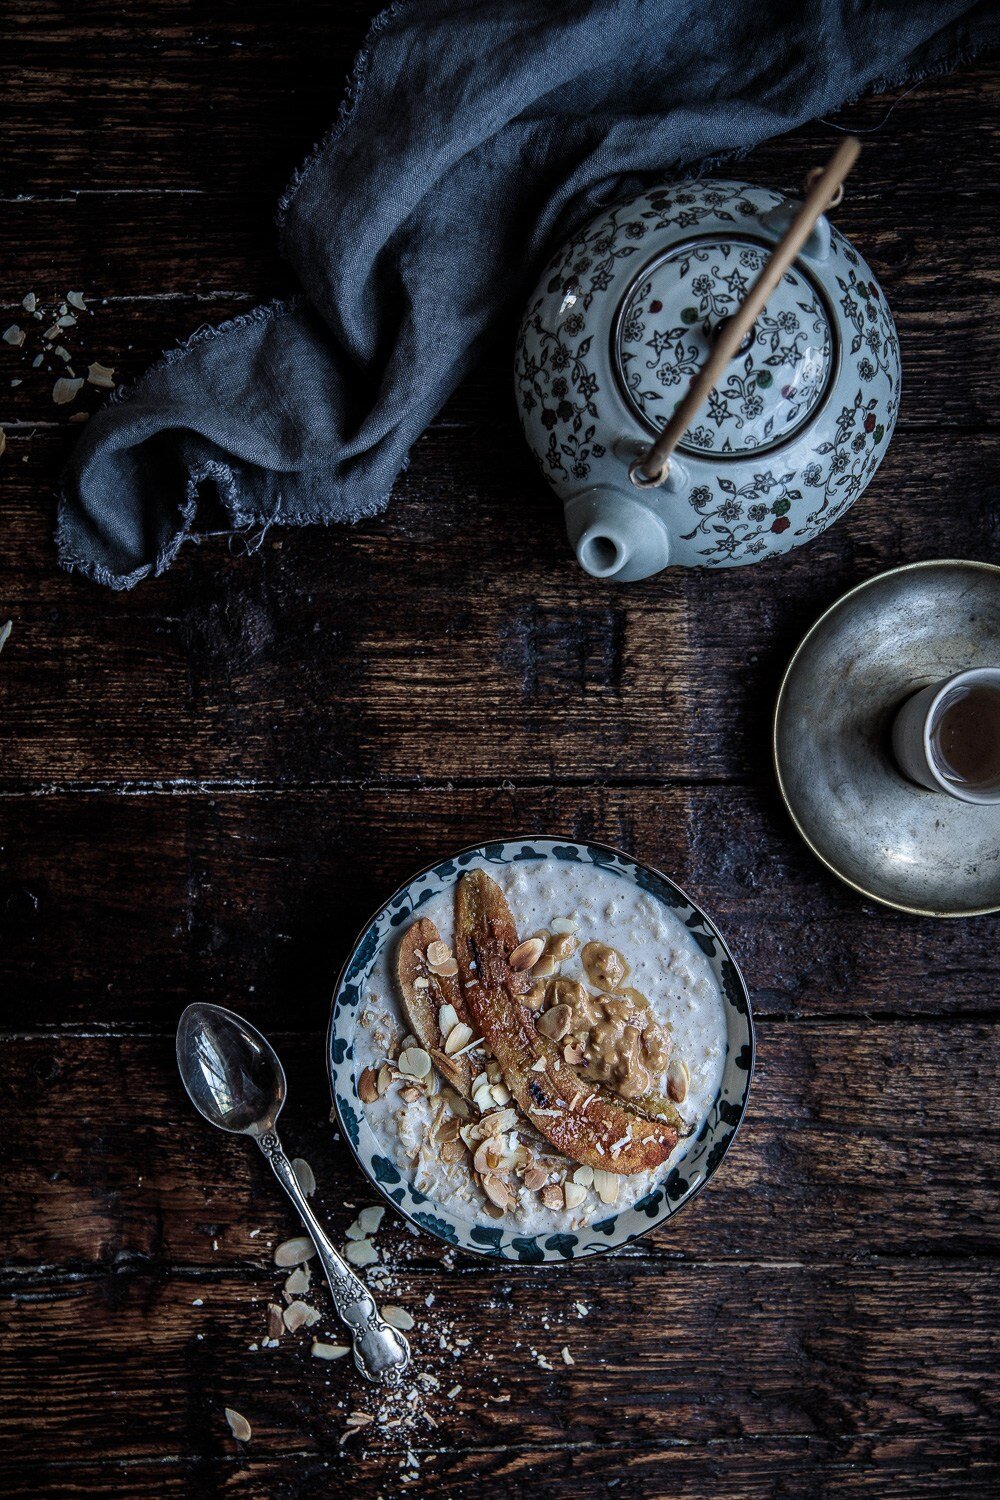 Creamy-Porridge-With-Roasted-Cinnamon-Sugar-Banana-_-Anisa-Sabet-_-The-Macadames-42-17.jpg